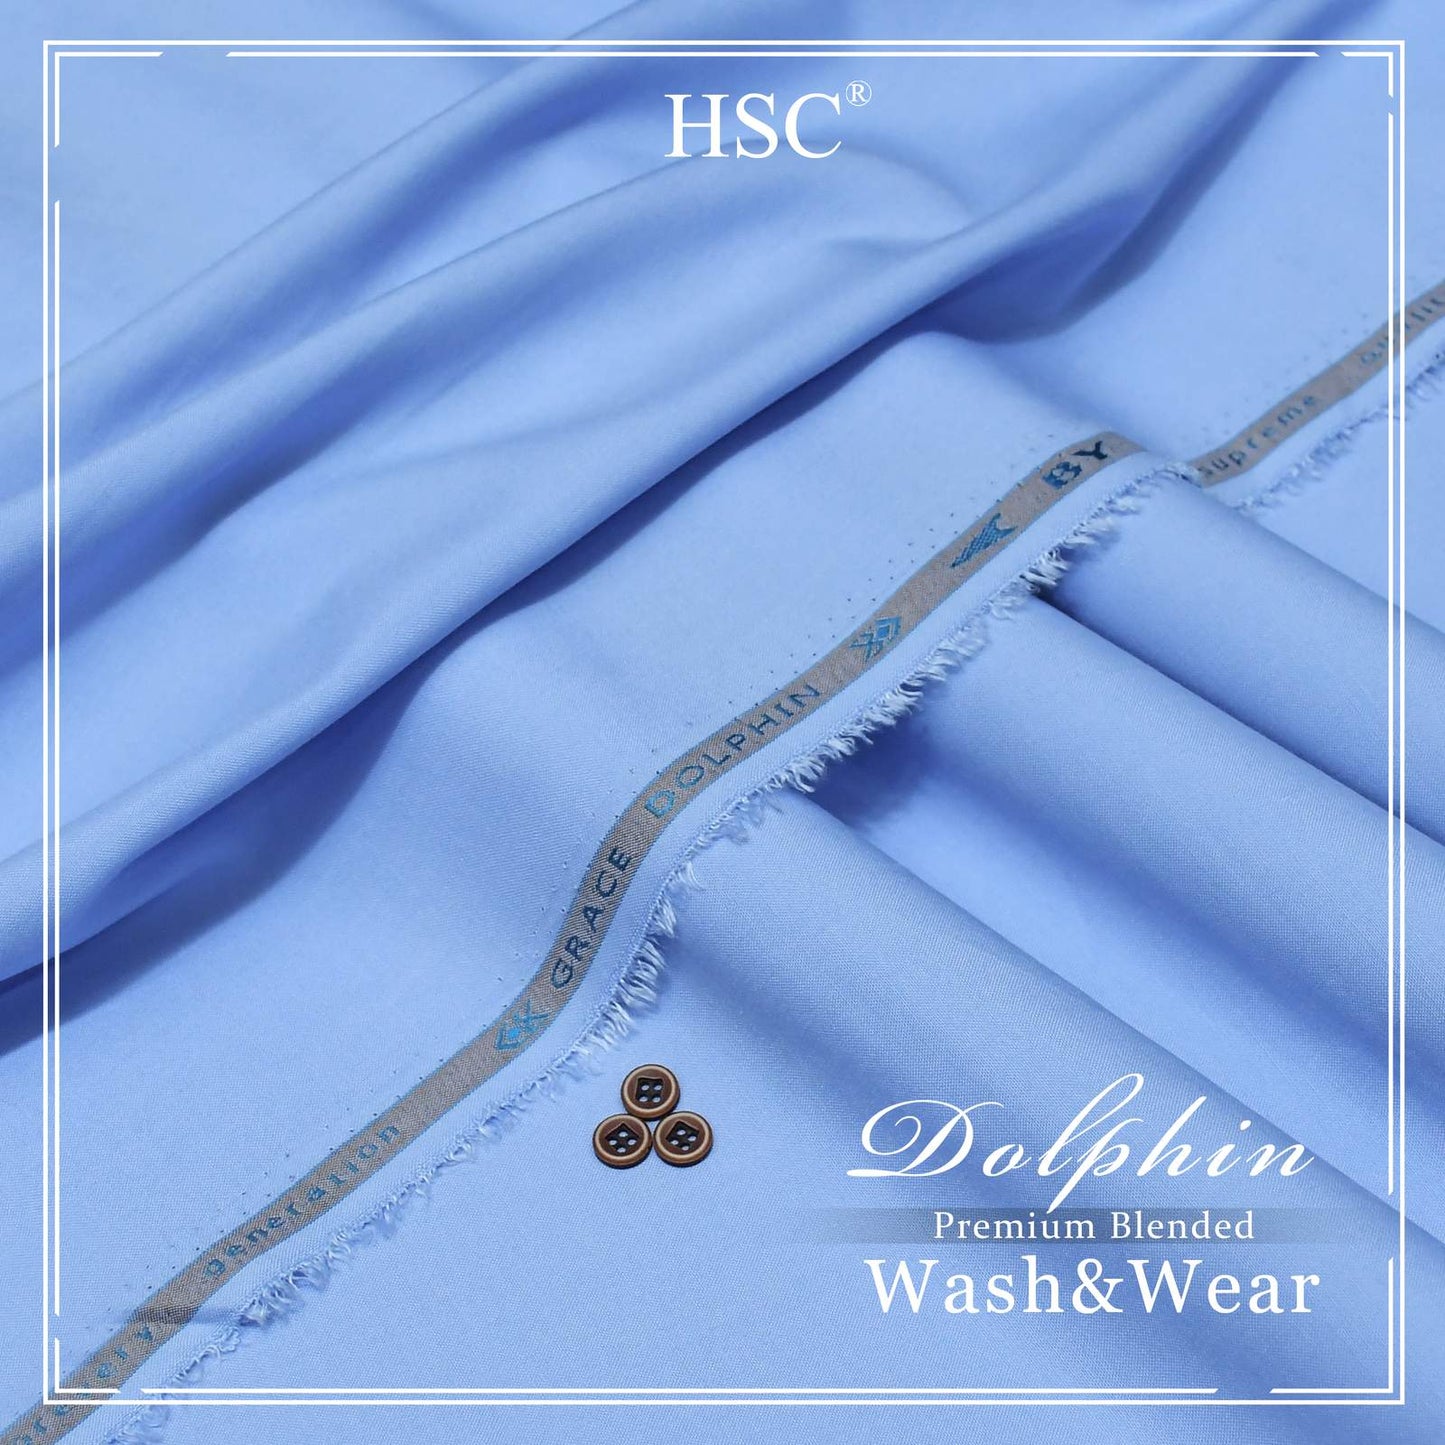 Dolphin Blended Premium Wash&Wear HSC BLENDED